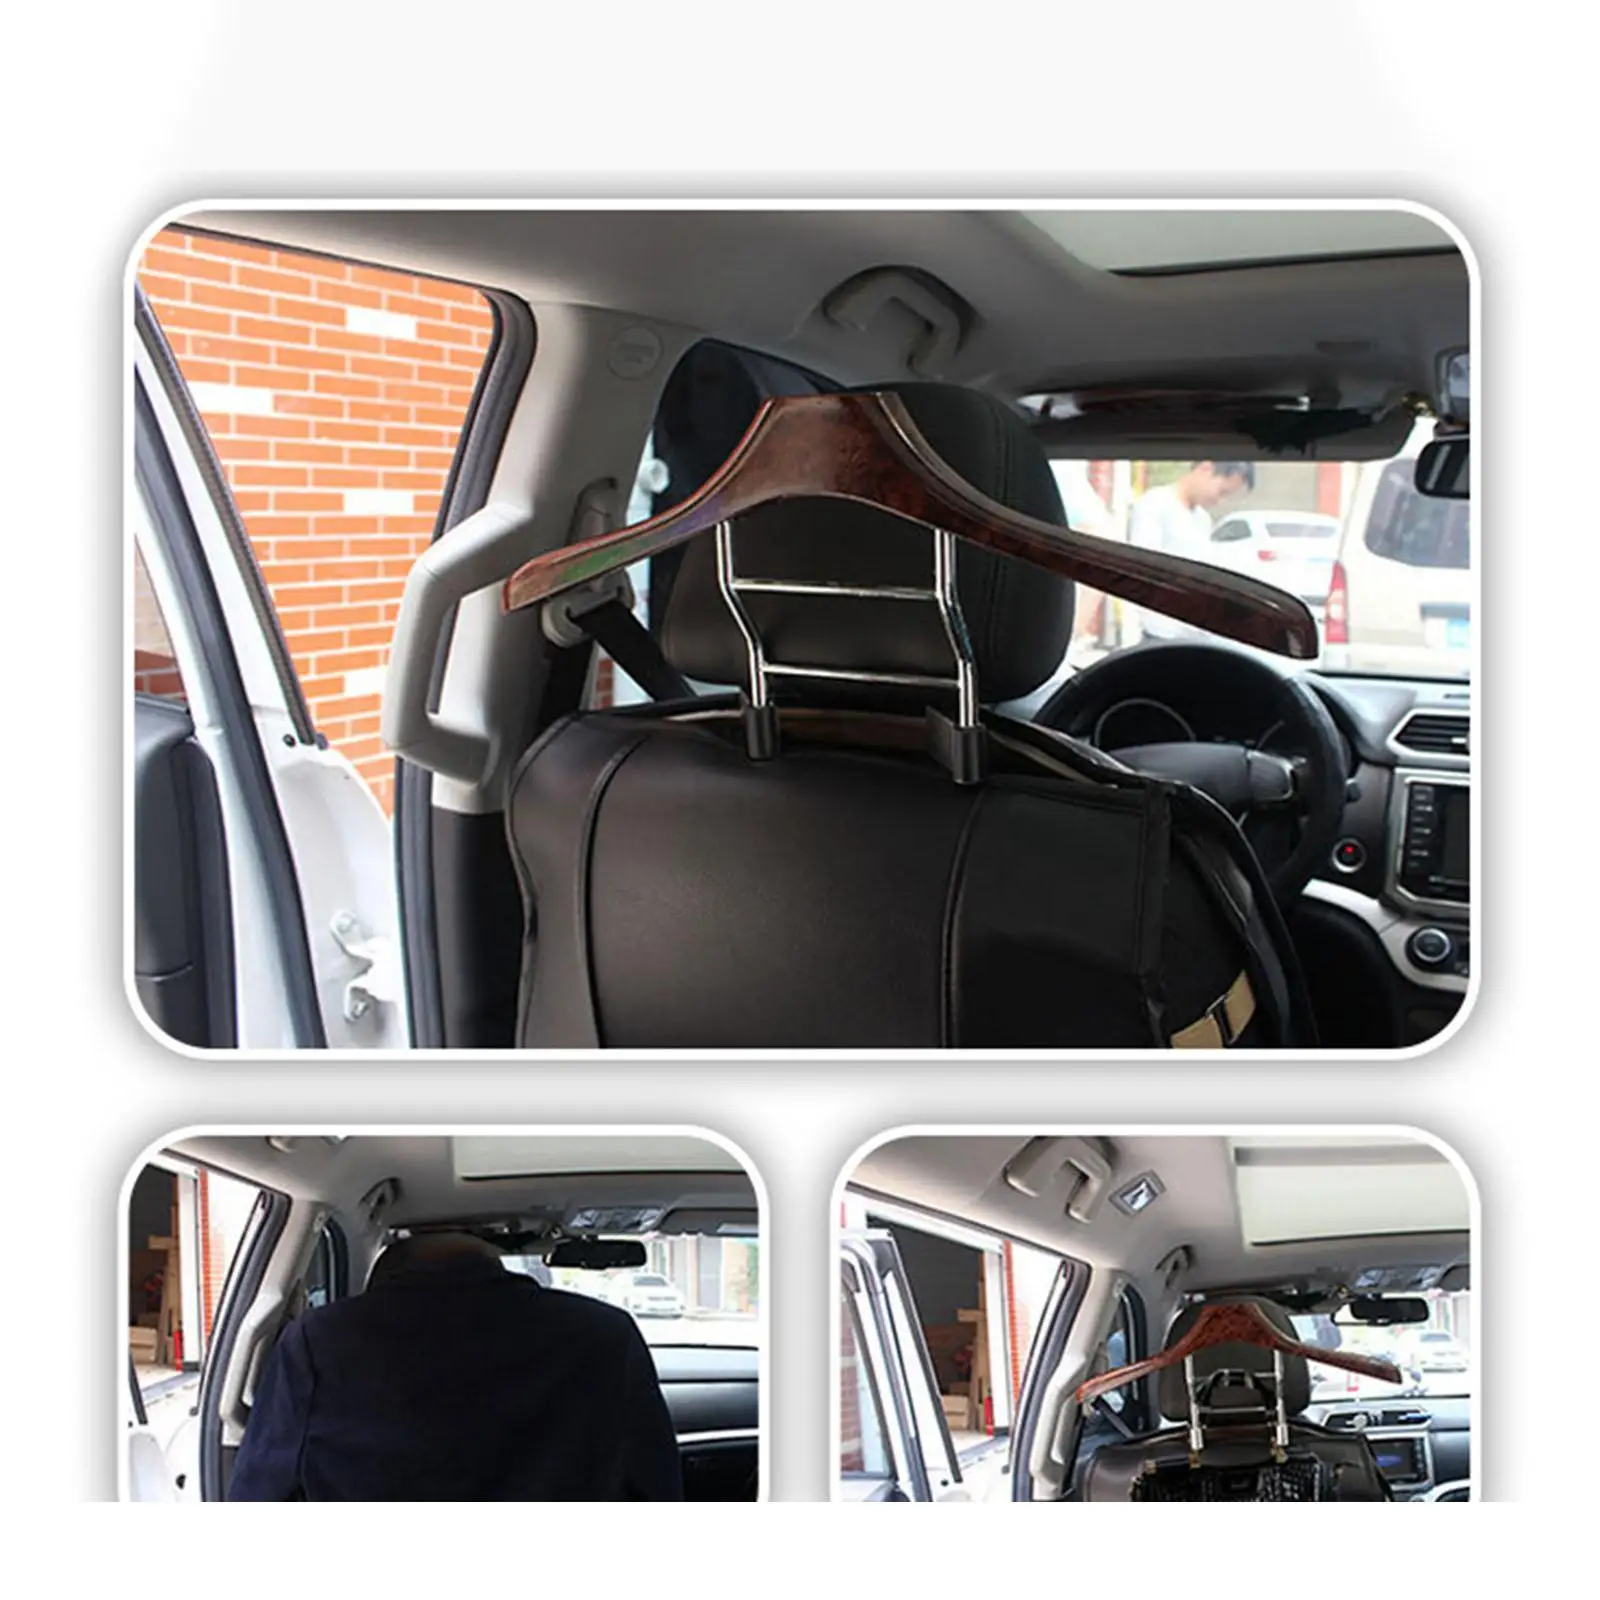 Car Headrest Restraint Rods Seat Chair Car Accessories Rack for Vests Uniforms RV Jackets Sweaters